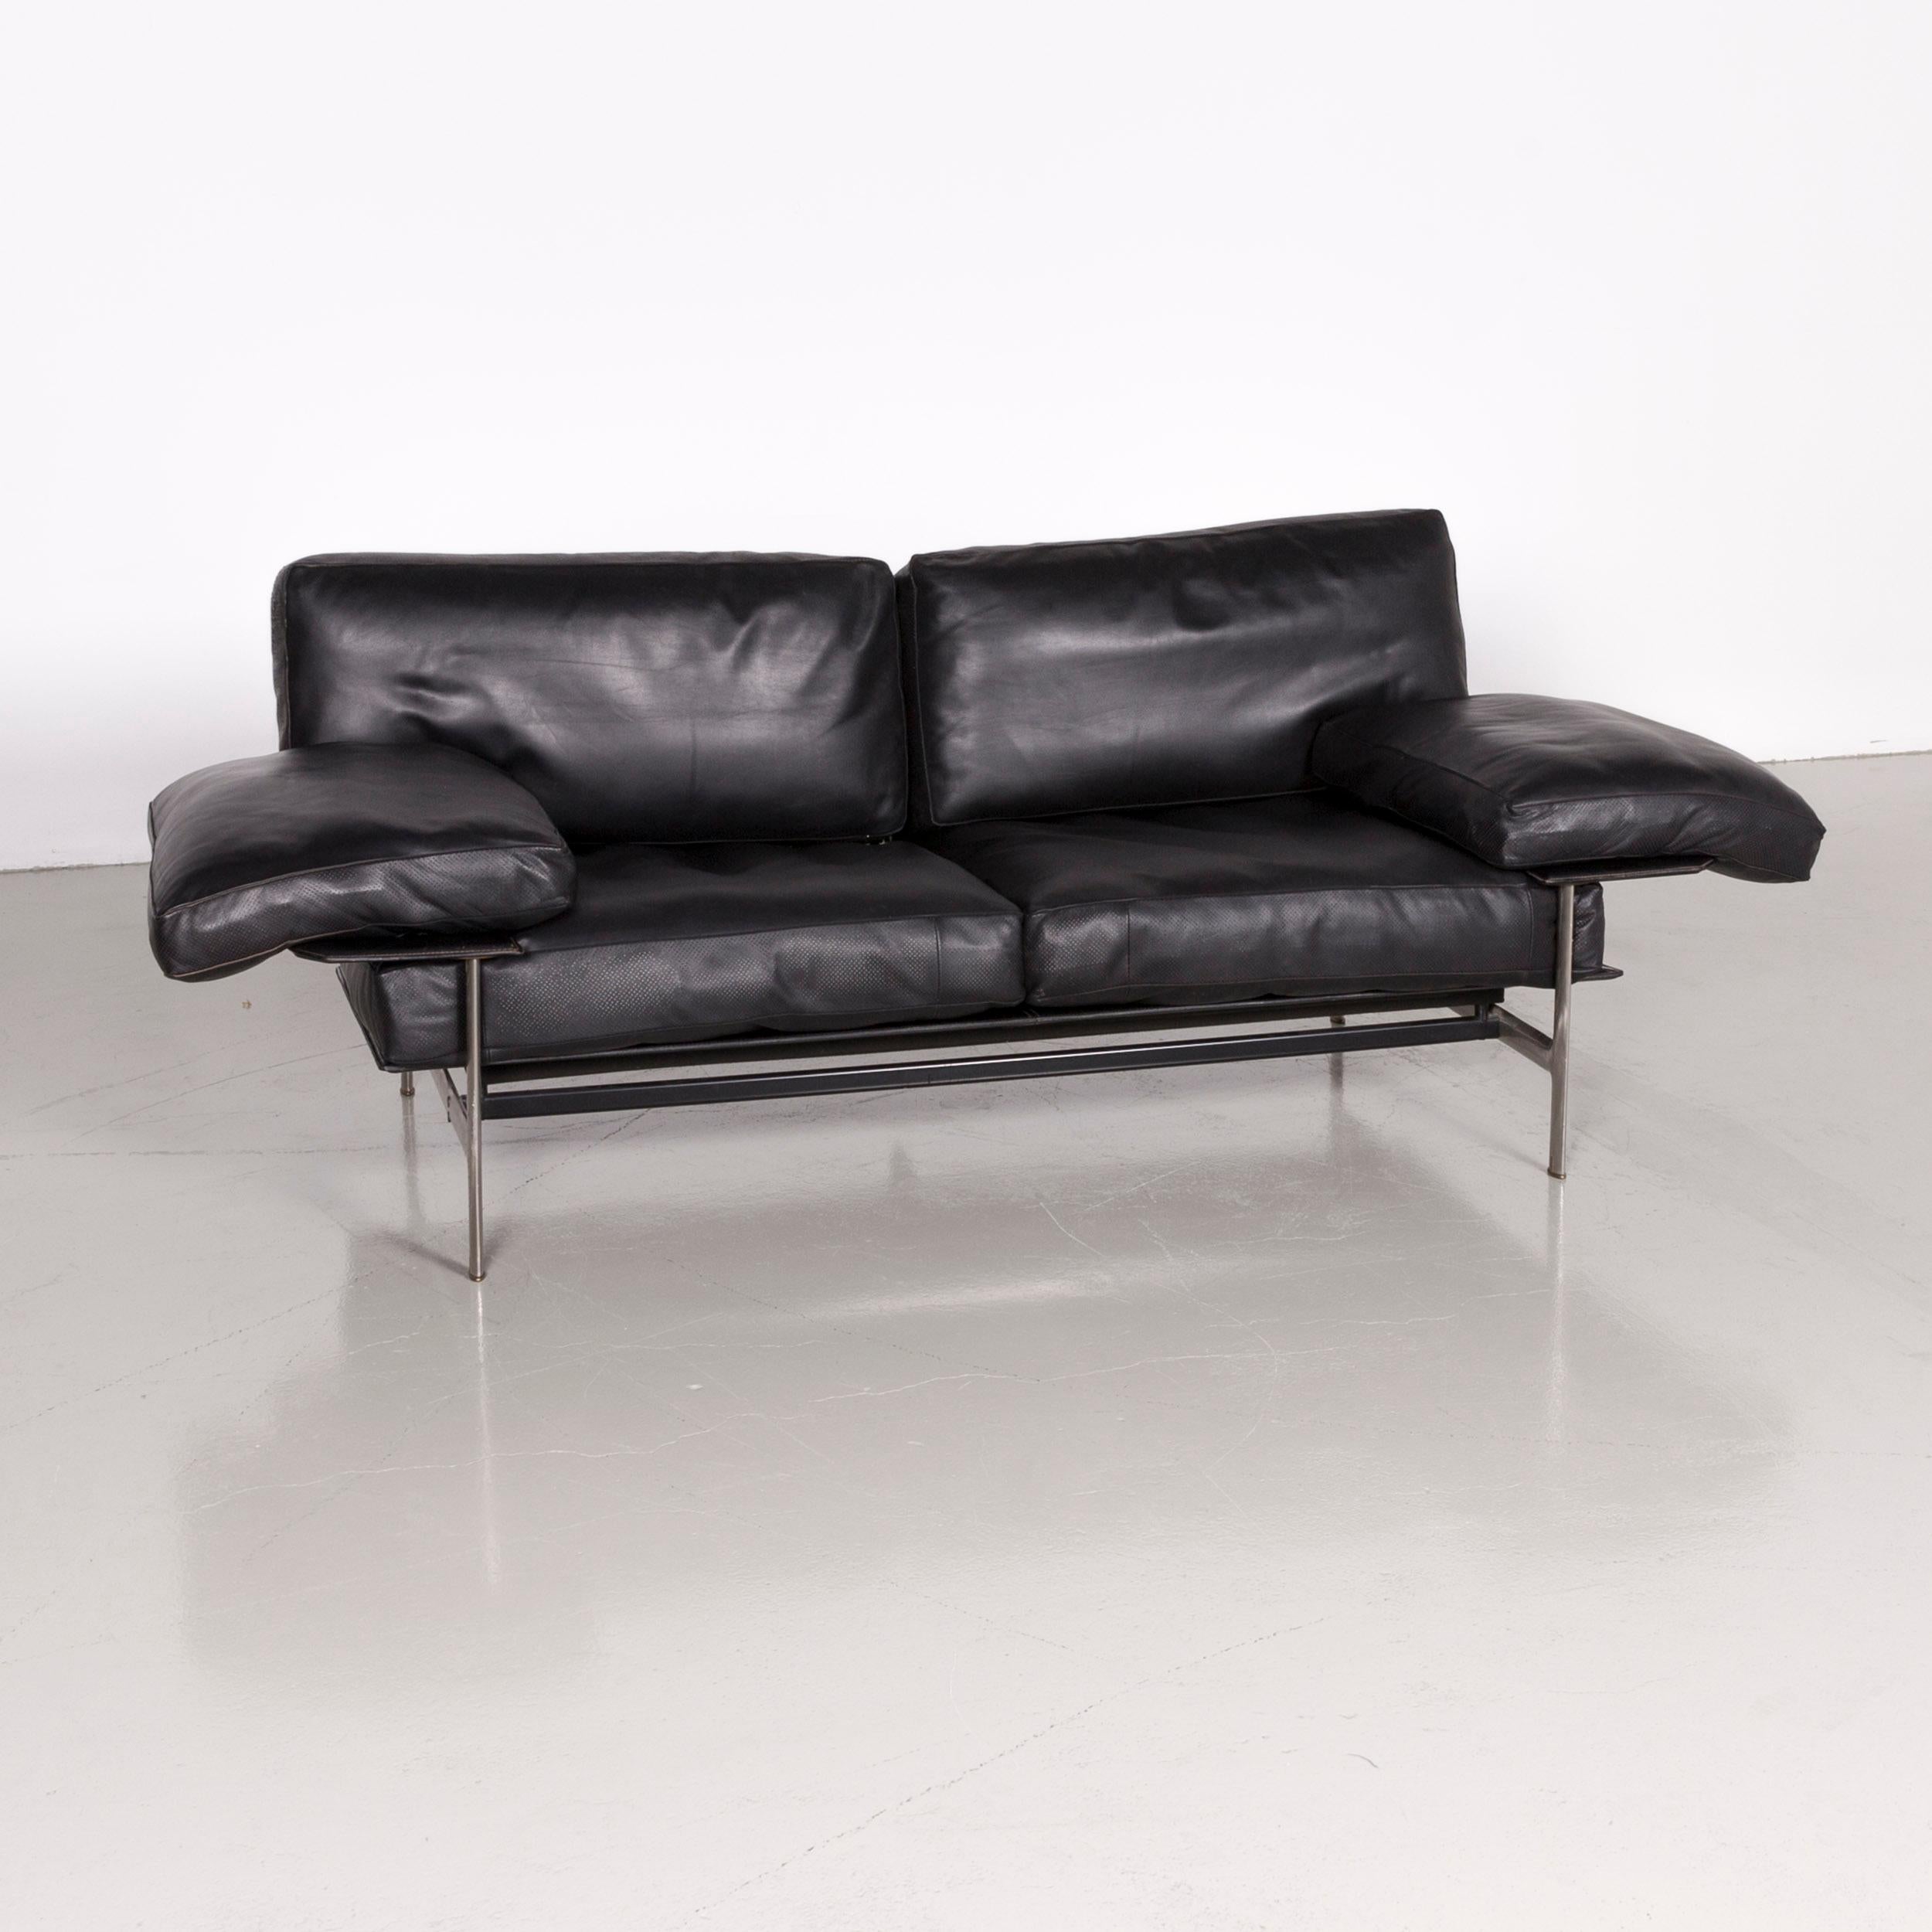 Italian B&B Italia Diesis Designer Sofa Leather Black Three-Seat Couch Modern For Sale